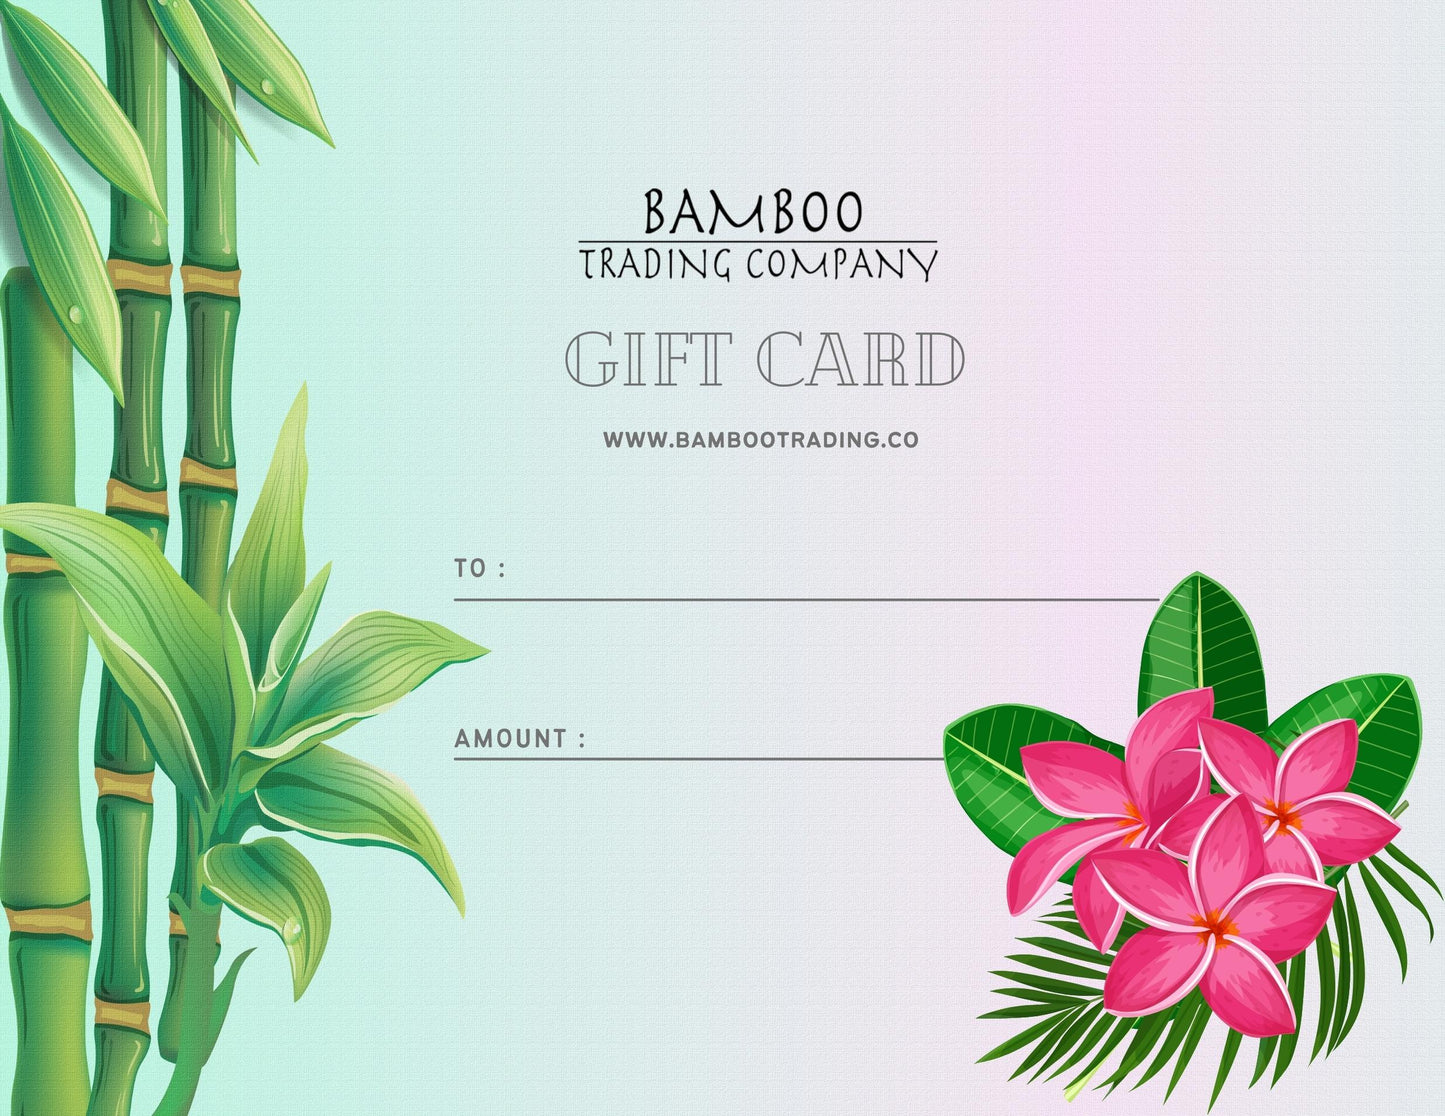 Bamboo Trading Company Gift Card